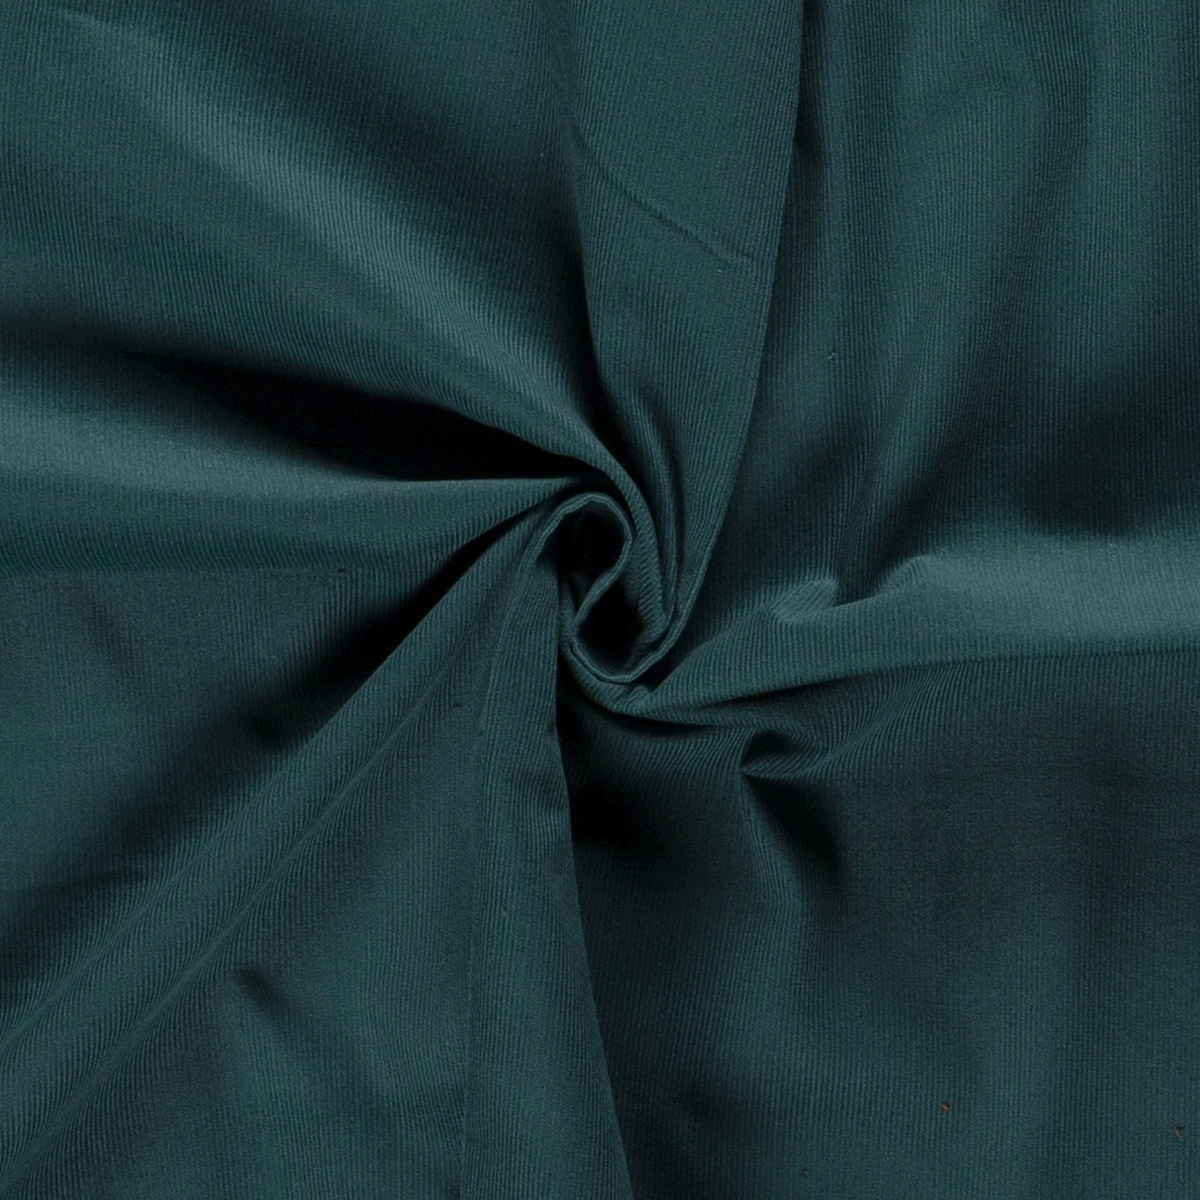 Feincord dunkelgrün, 100% BW, 144-146 cm breit 